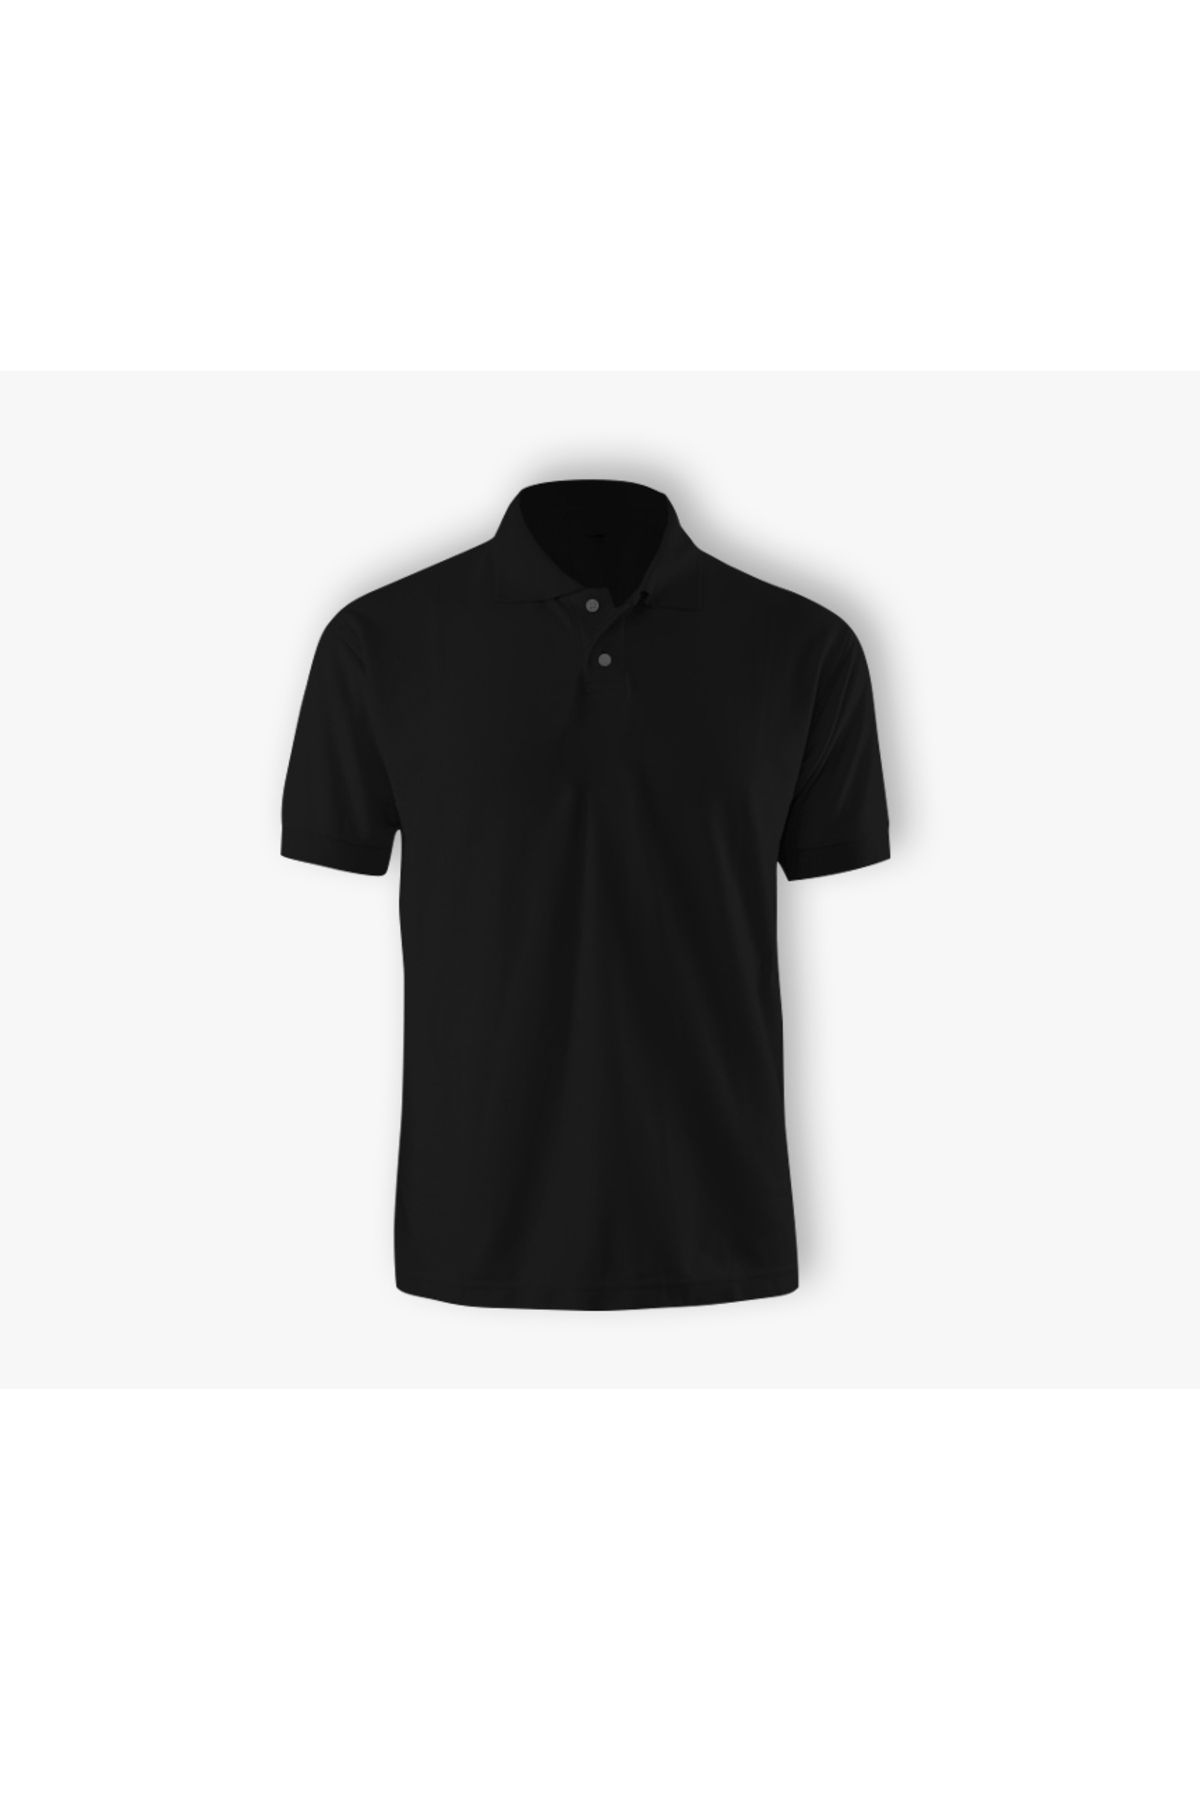 Hultabs Unisex %100 Pamuk Lacoste Polo Yaka Yazlık T-shirt